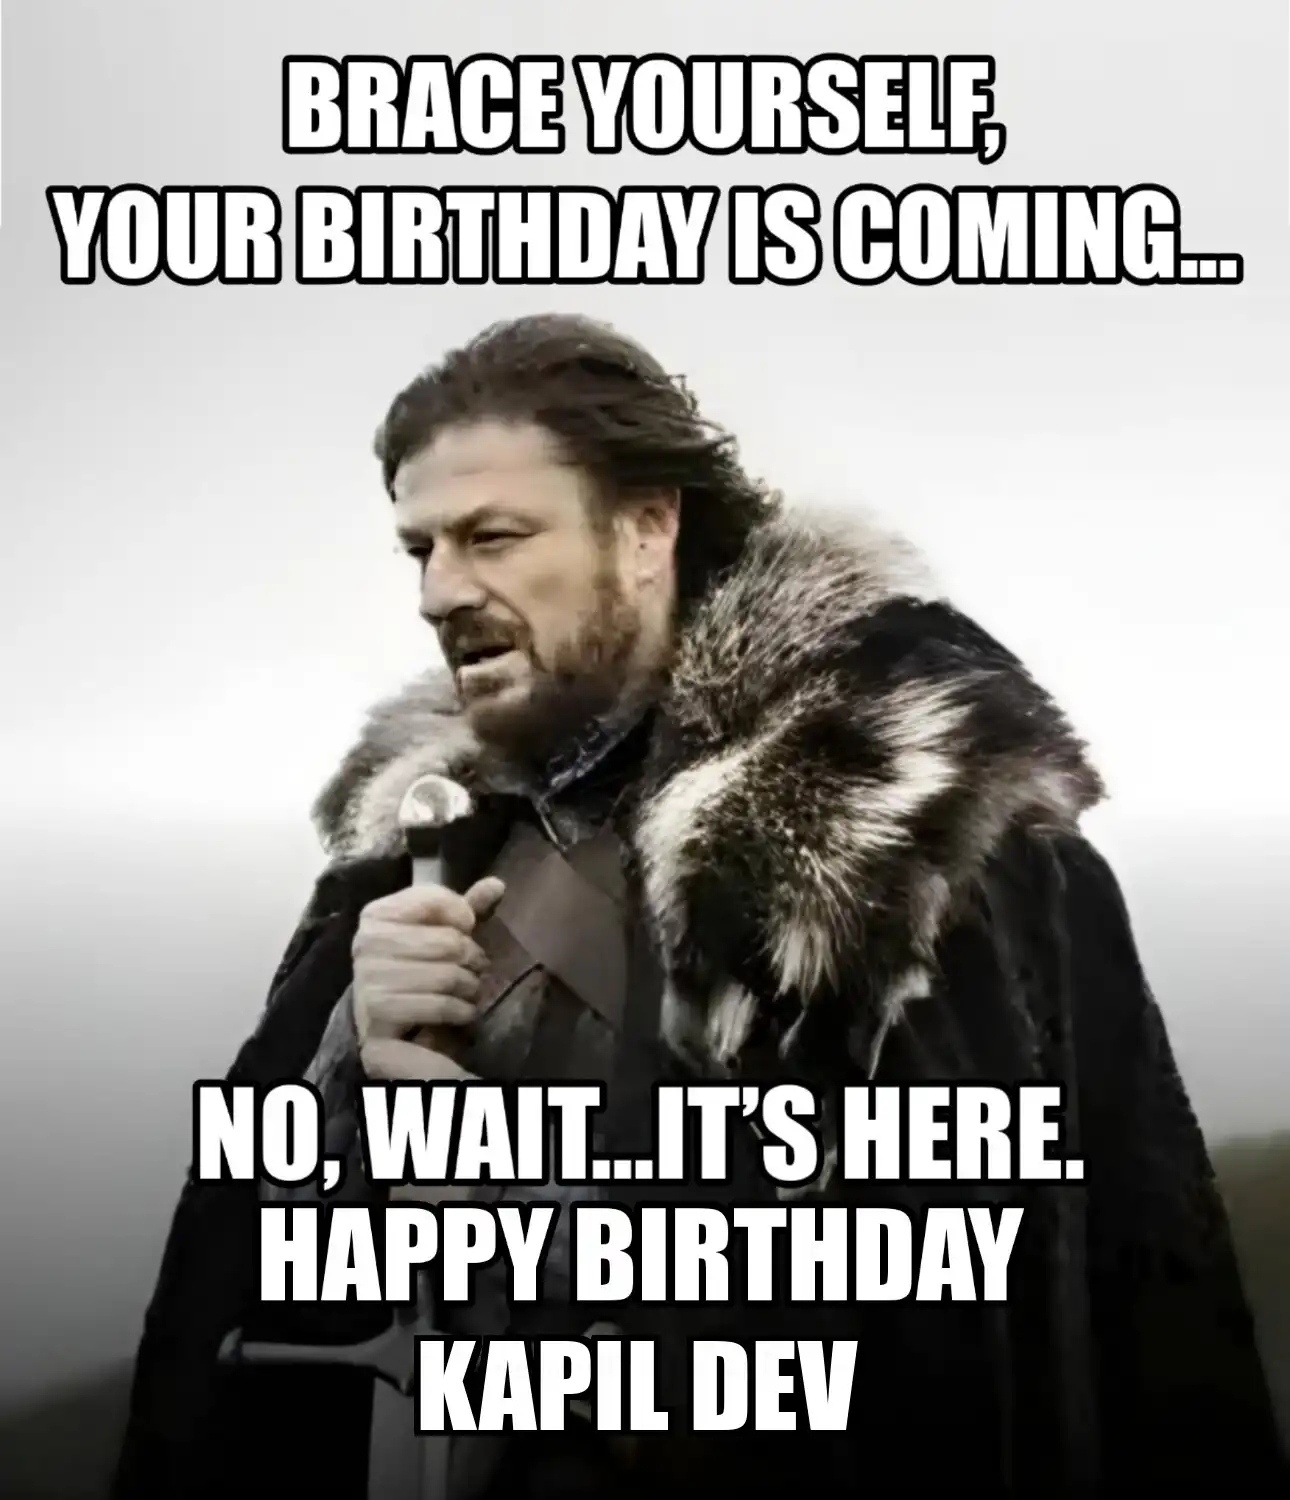 Happy Birthday Kapil Dev Brace Yourself Your Birthday Is Coming Meme